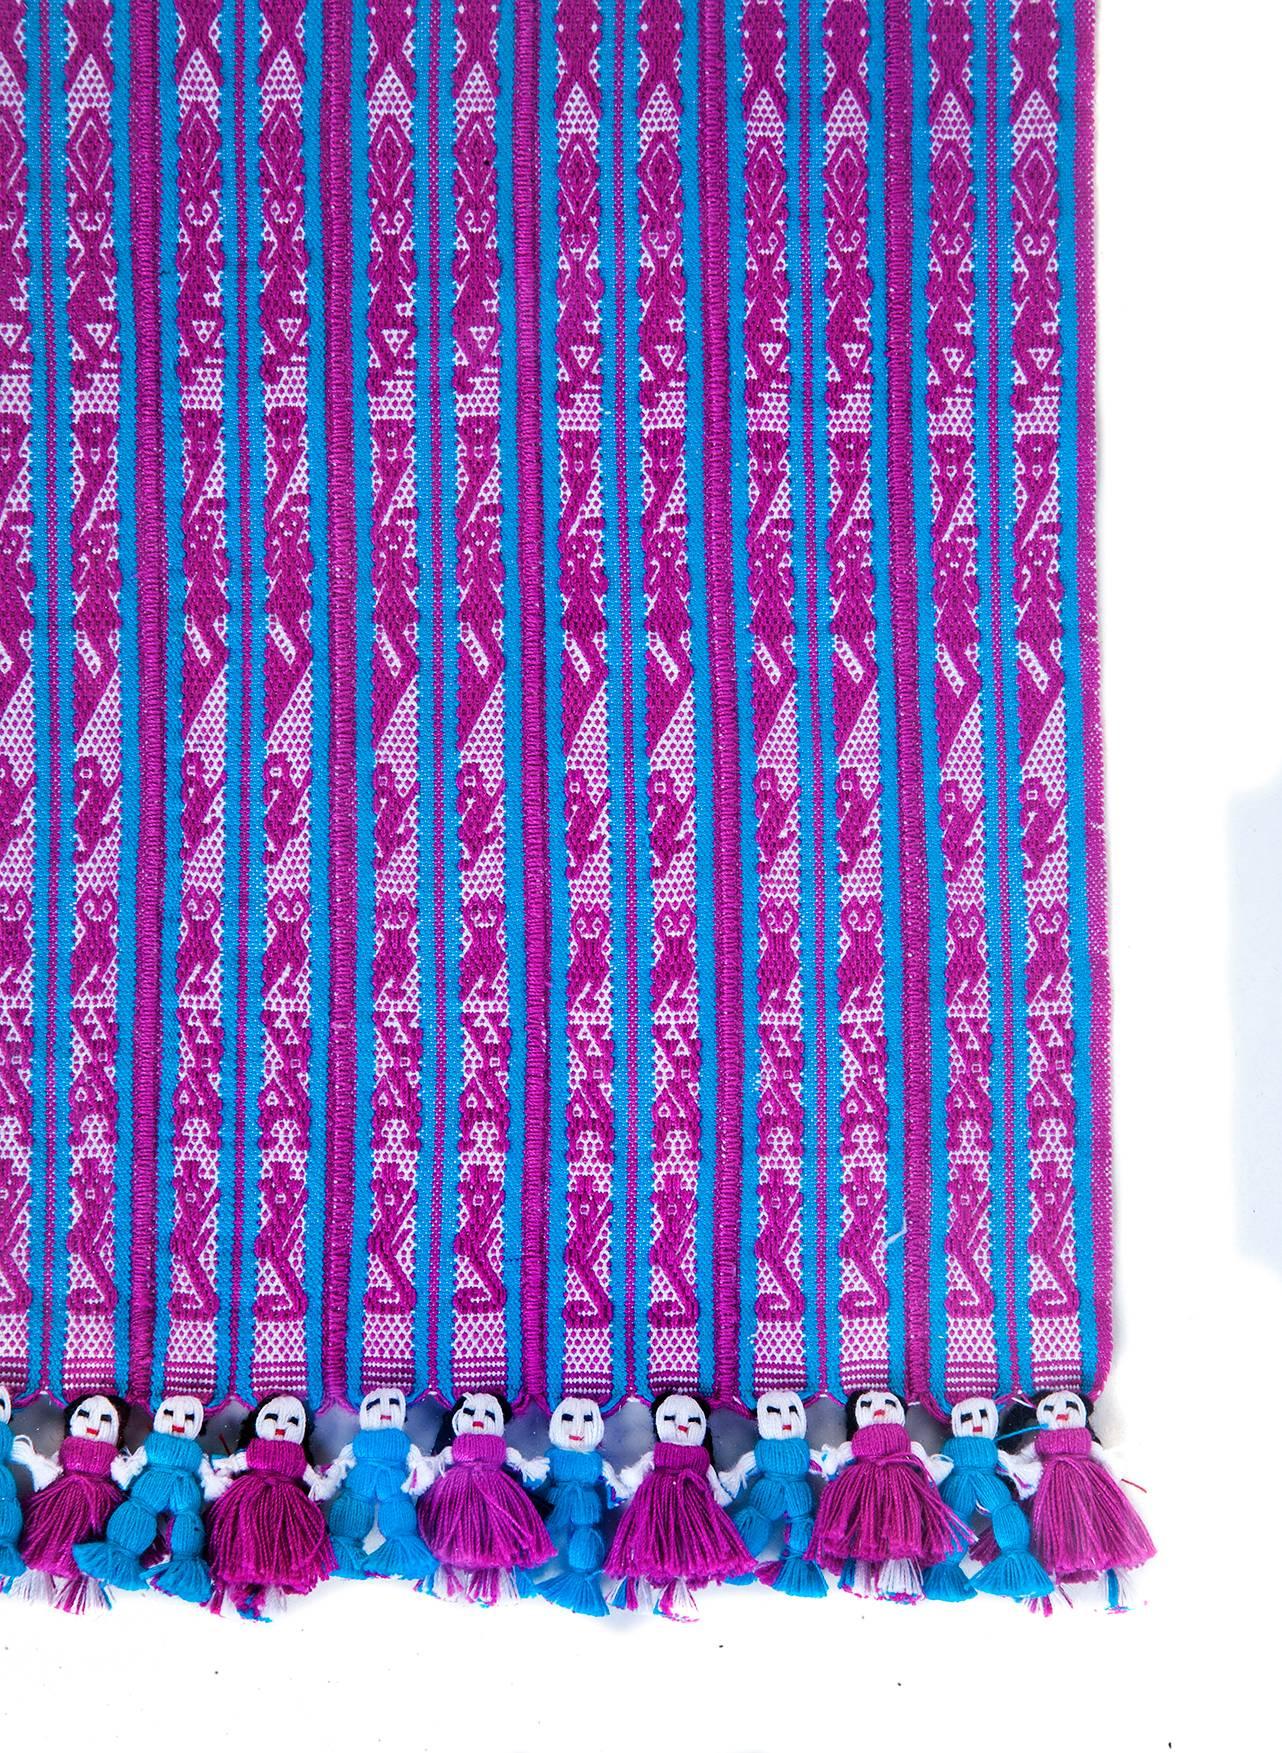 Tapete Miniatura Azul y Rosa / Textiles Mexican Folk Art Miniature Rug Frame 1